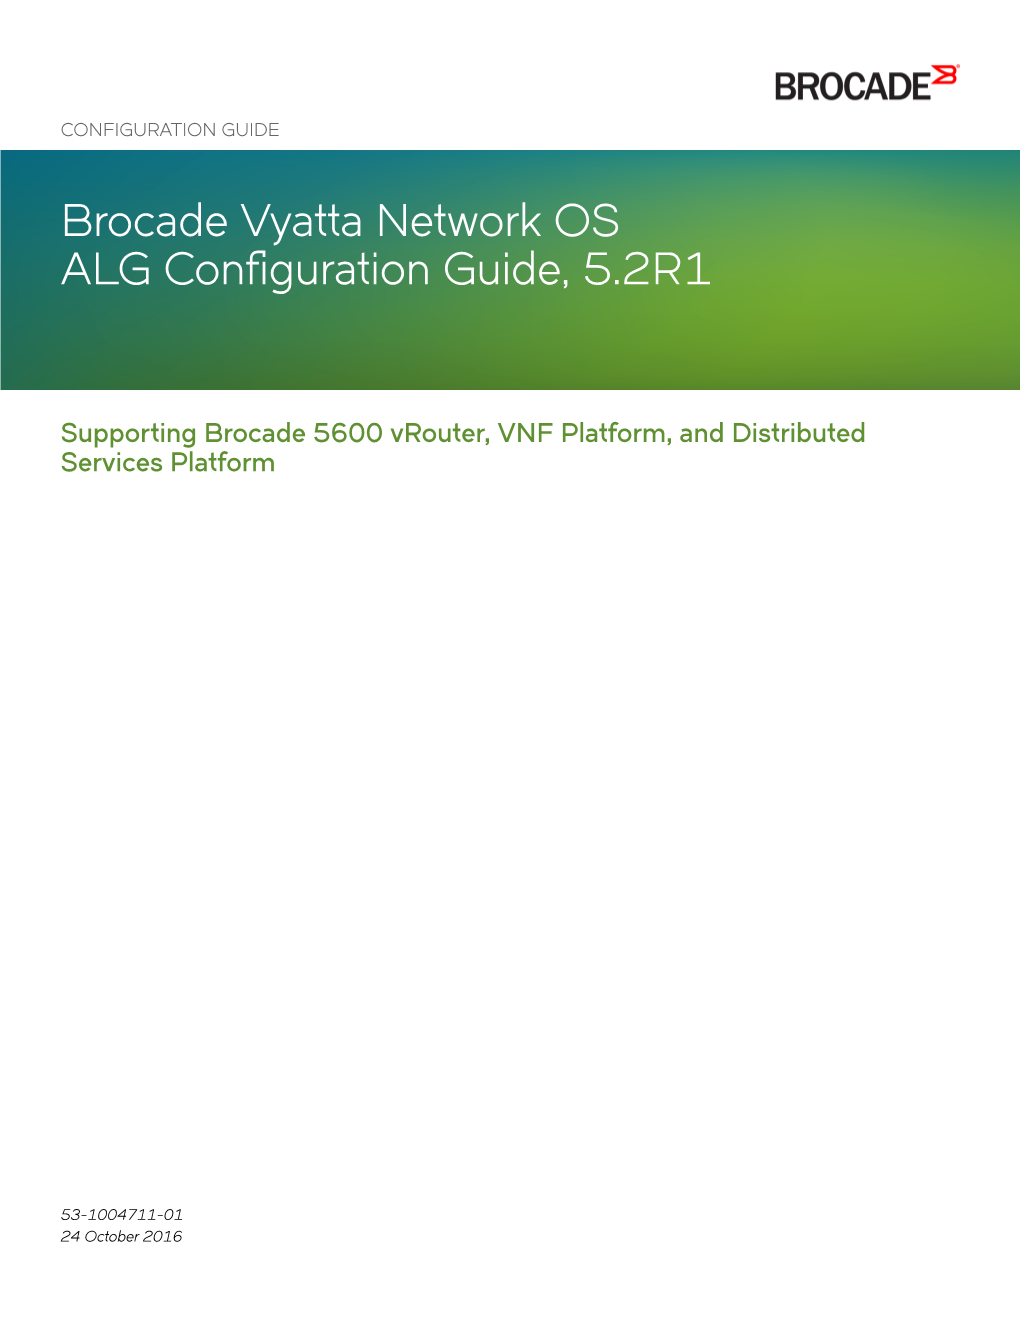 Brocade Vyatta Network OS ALG Configuration Guide, 5.2R1